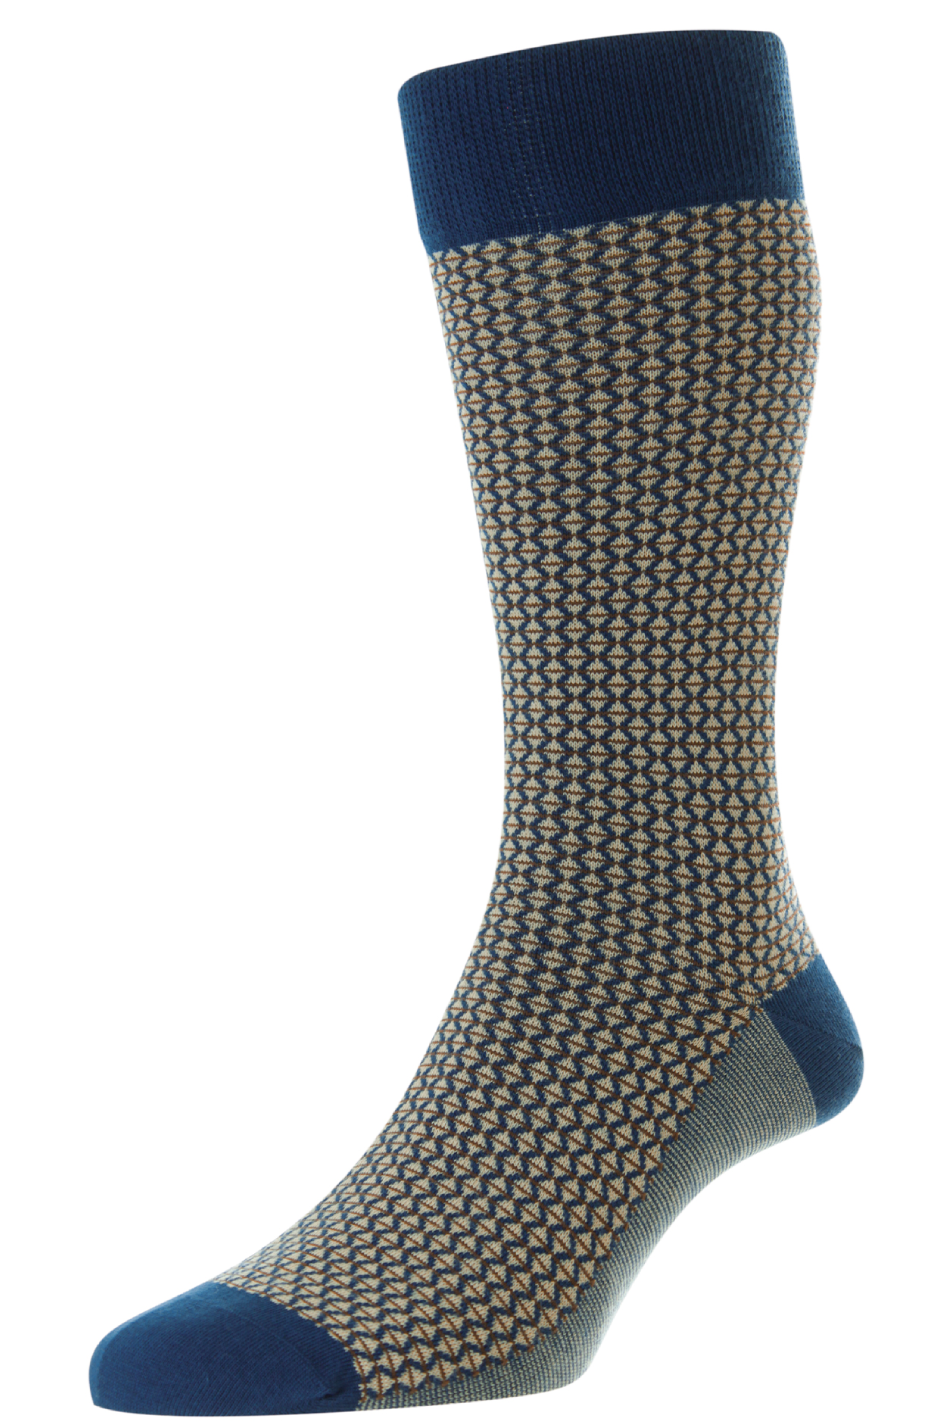 Pantherella Men's Elgar Diamond Jacquard Sock